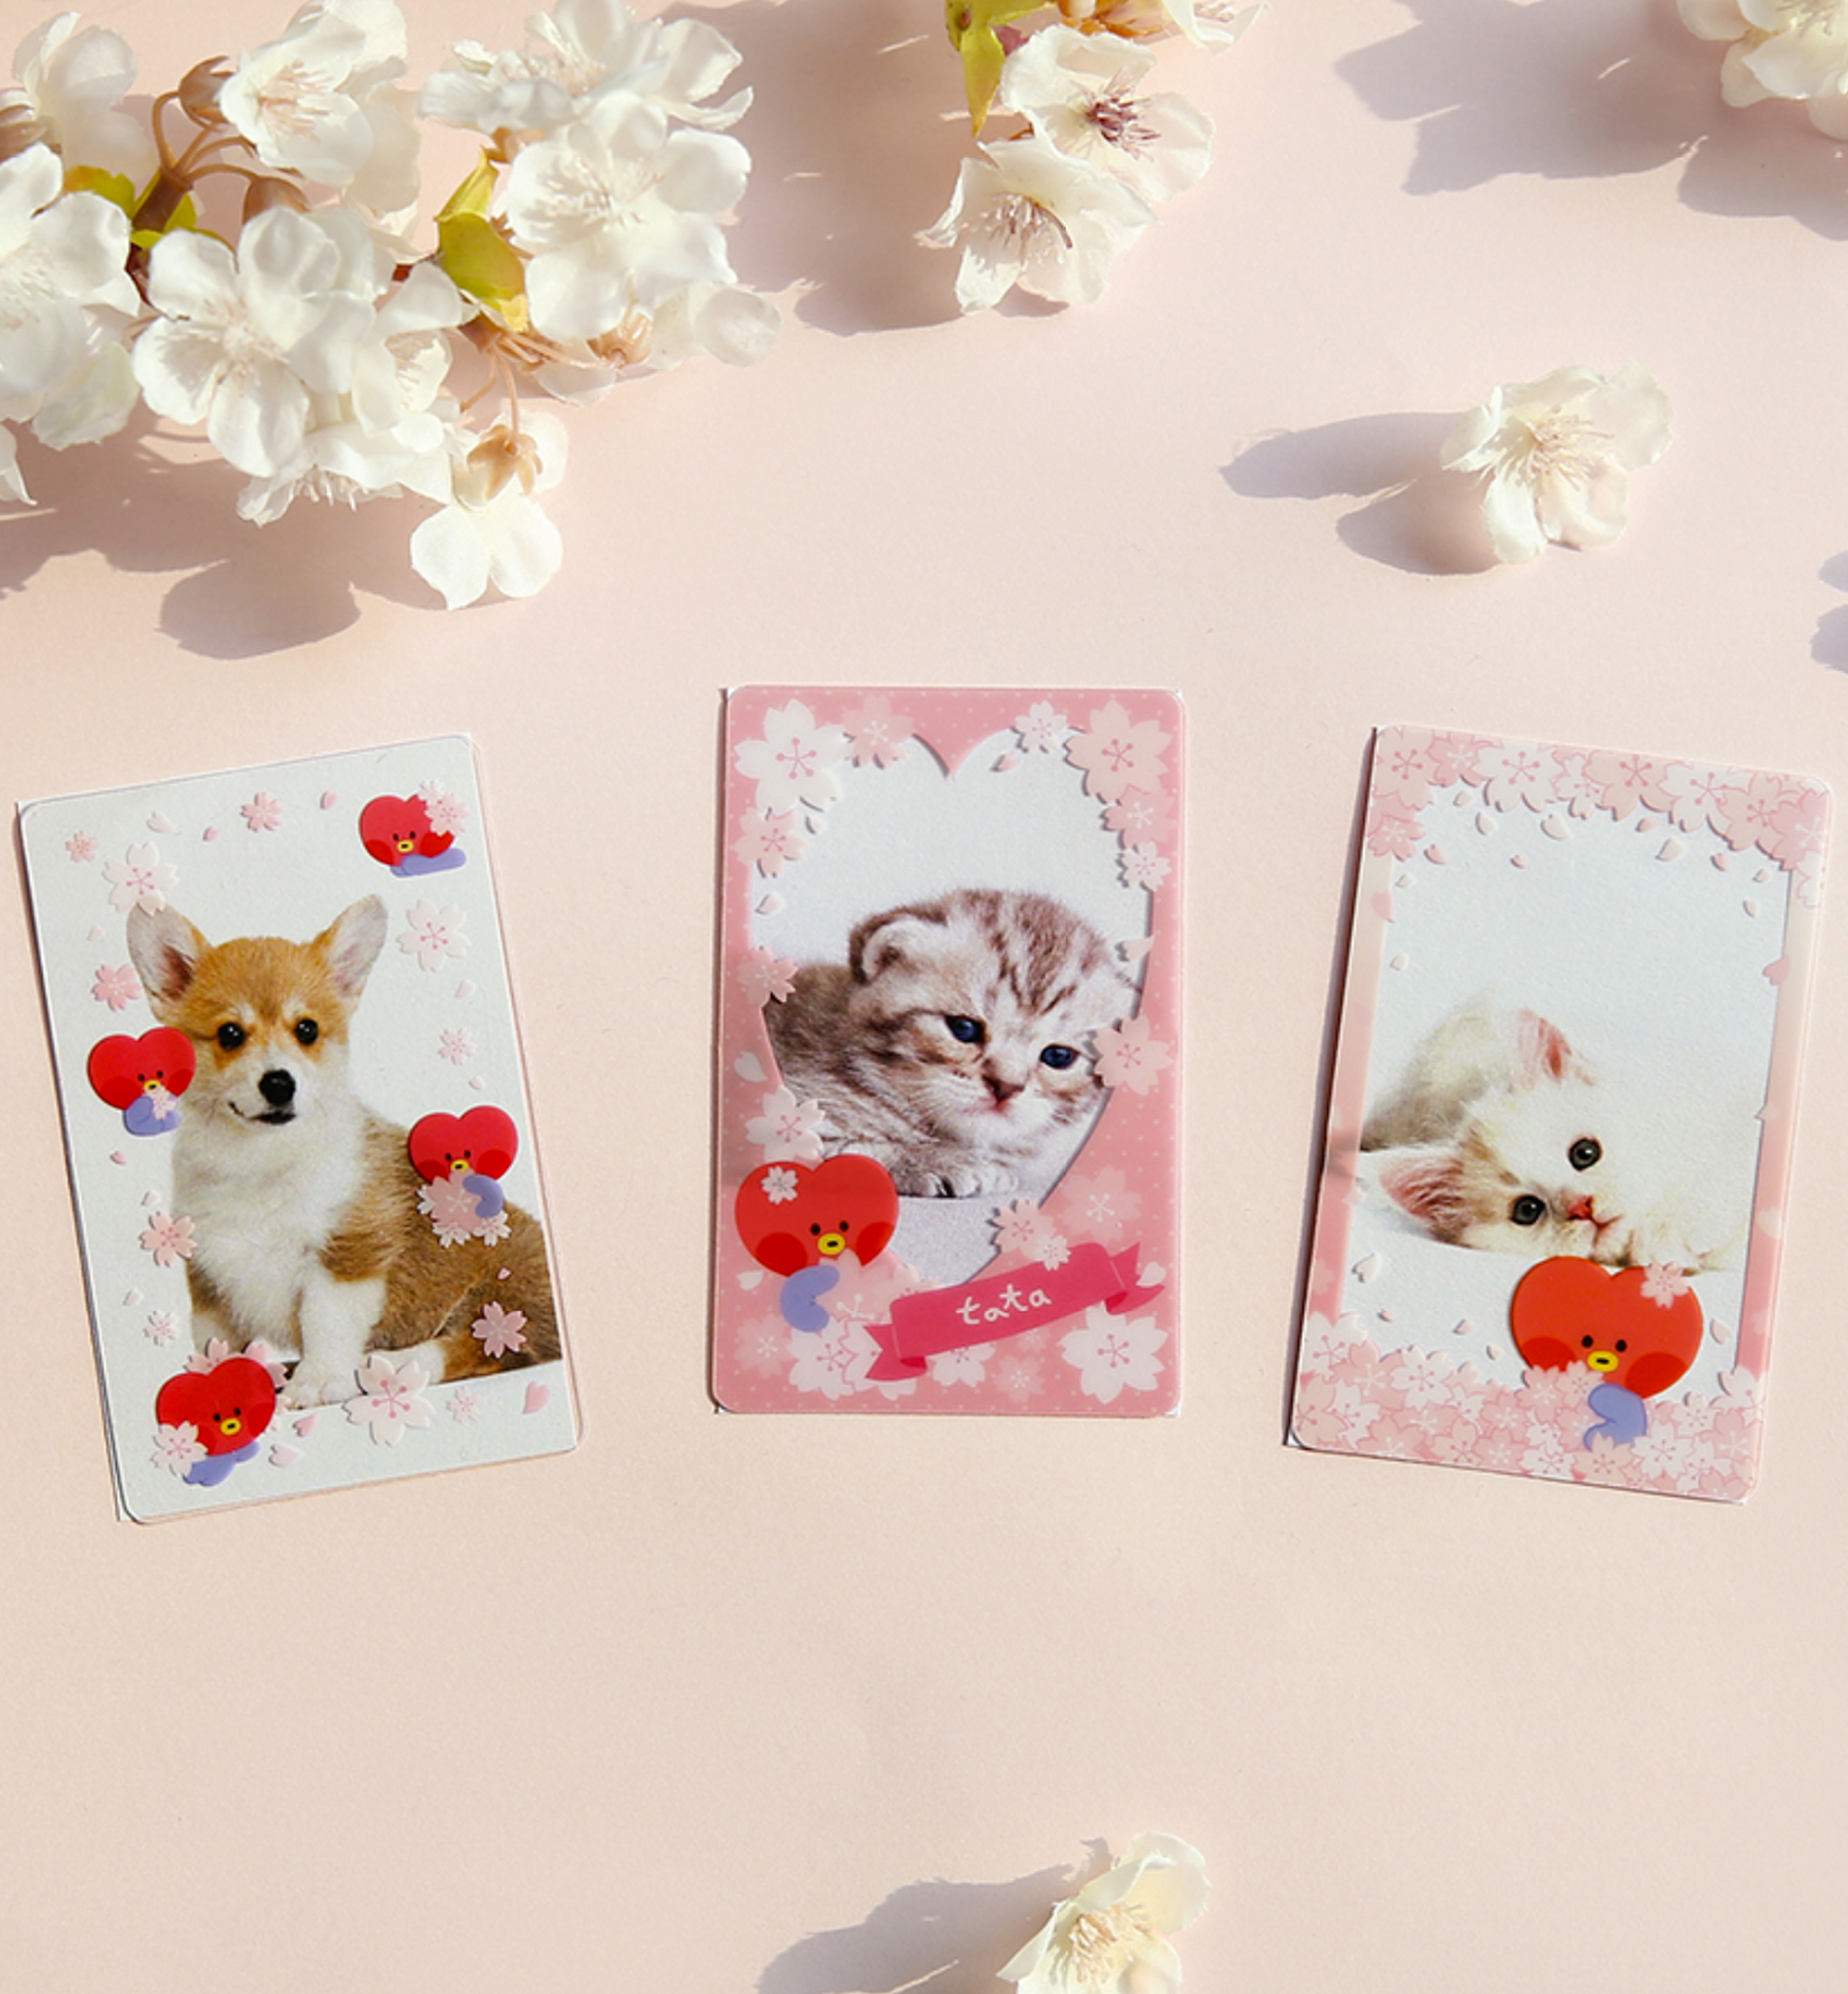 BT21 Cherry Blossom Photocard Frame [Minini]